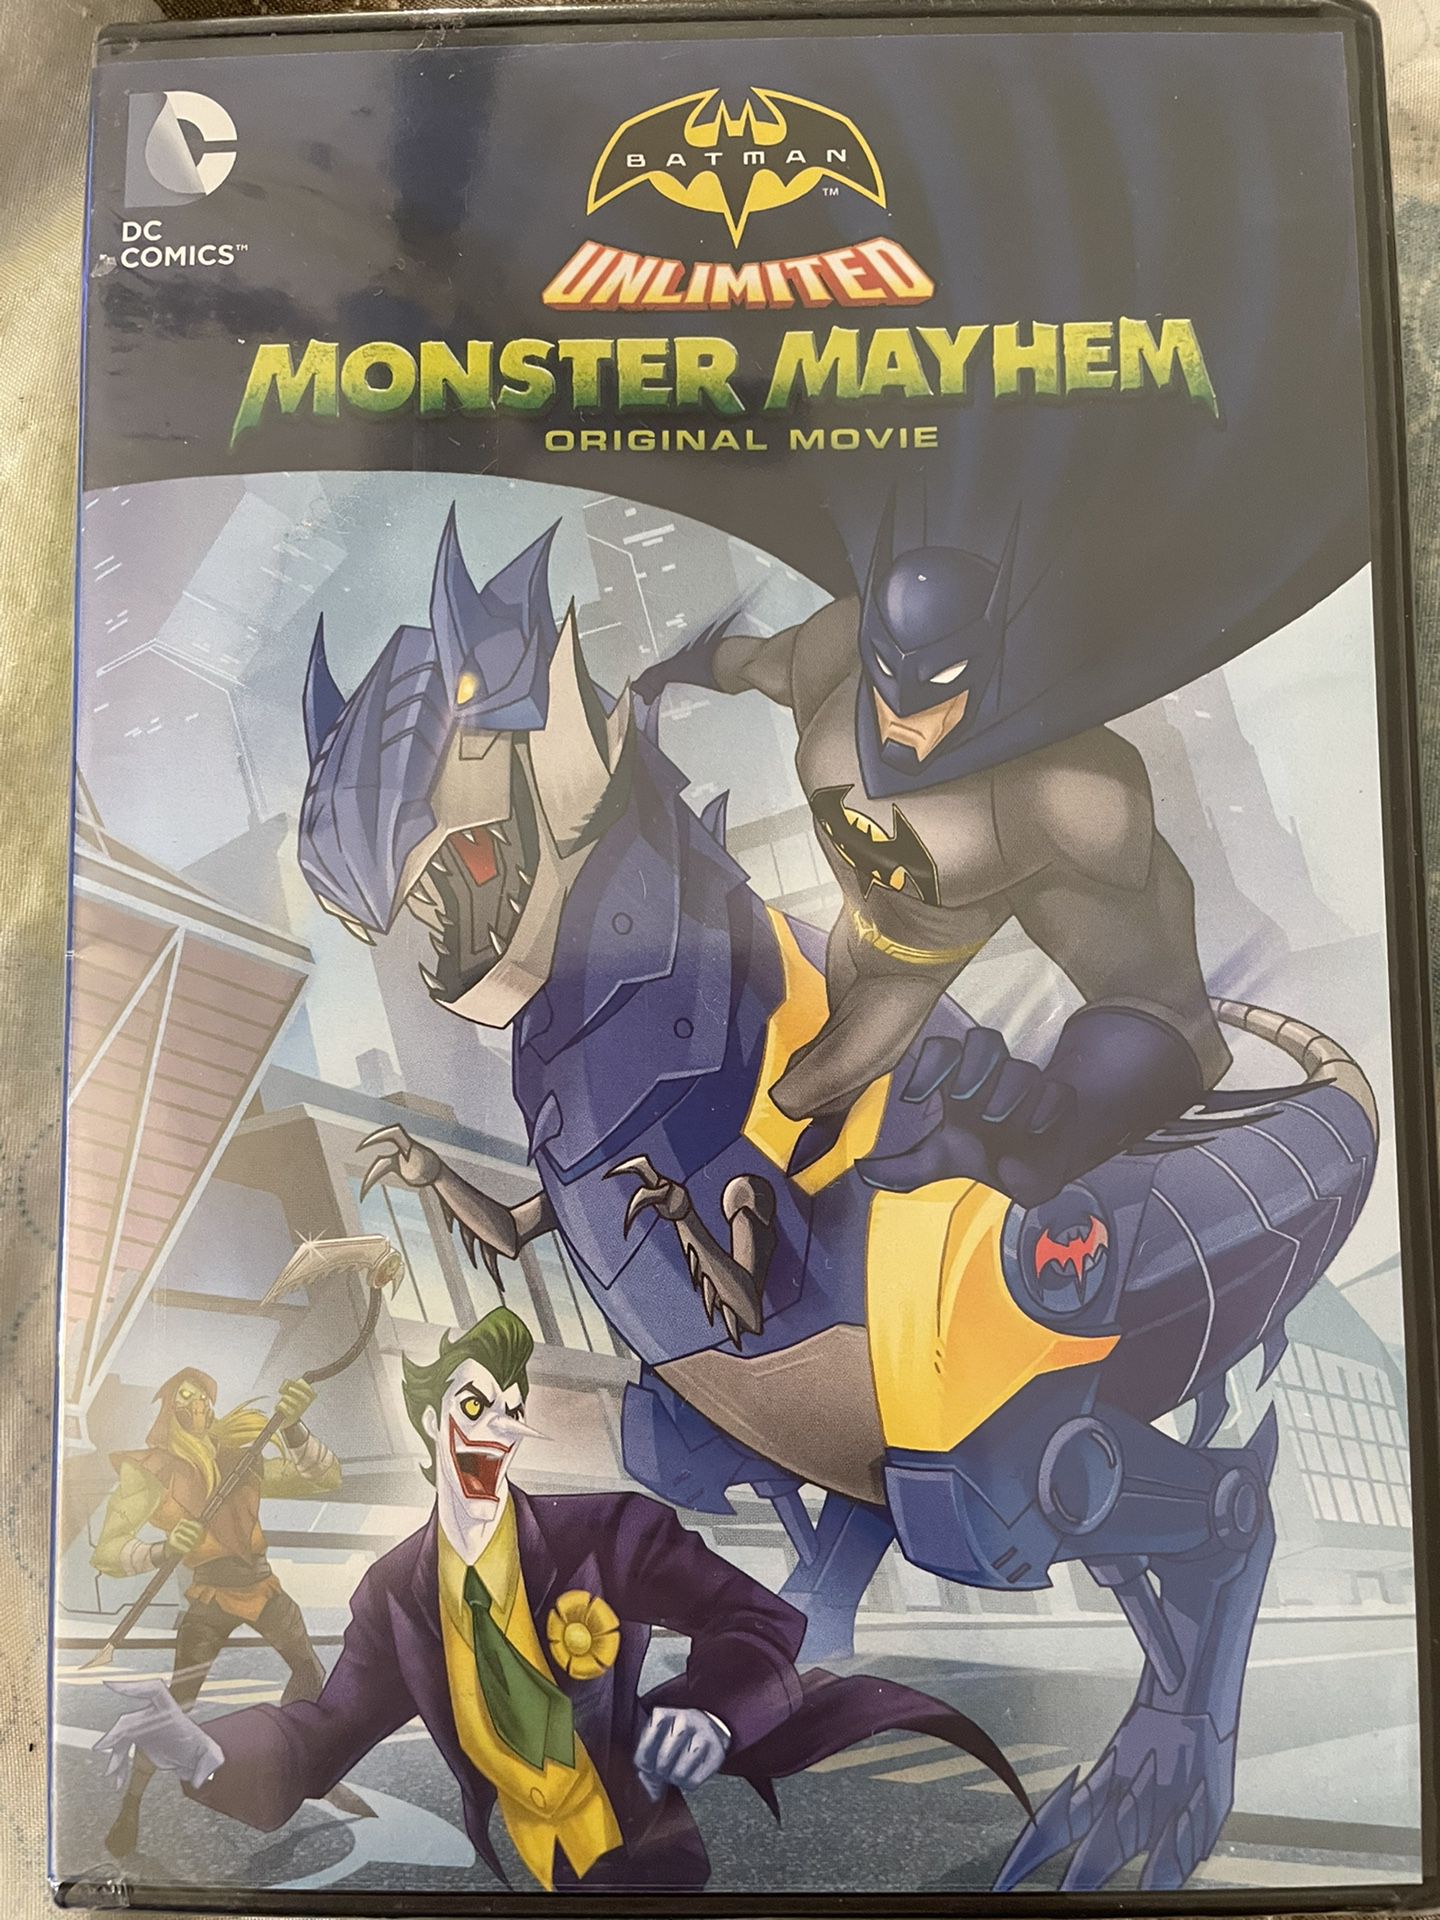 BATMAN UNLIMITED MONSTER MAYHEM (DVD) NEW for Sale in Coppell, TX - OfferUp